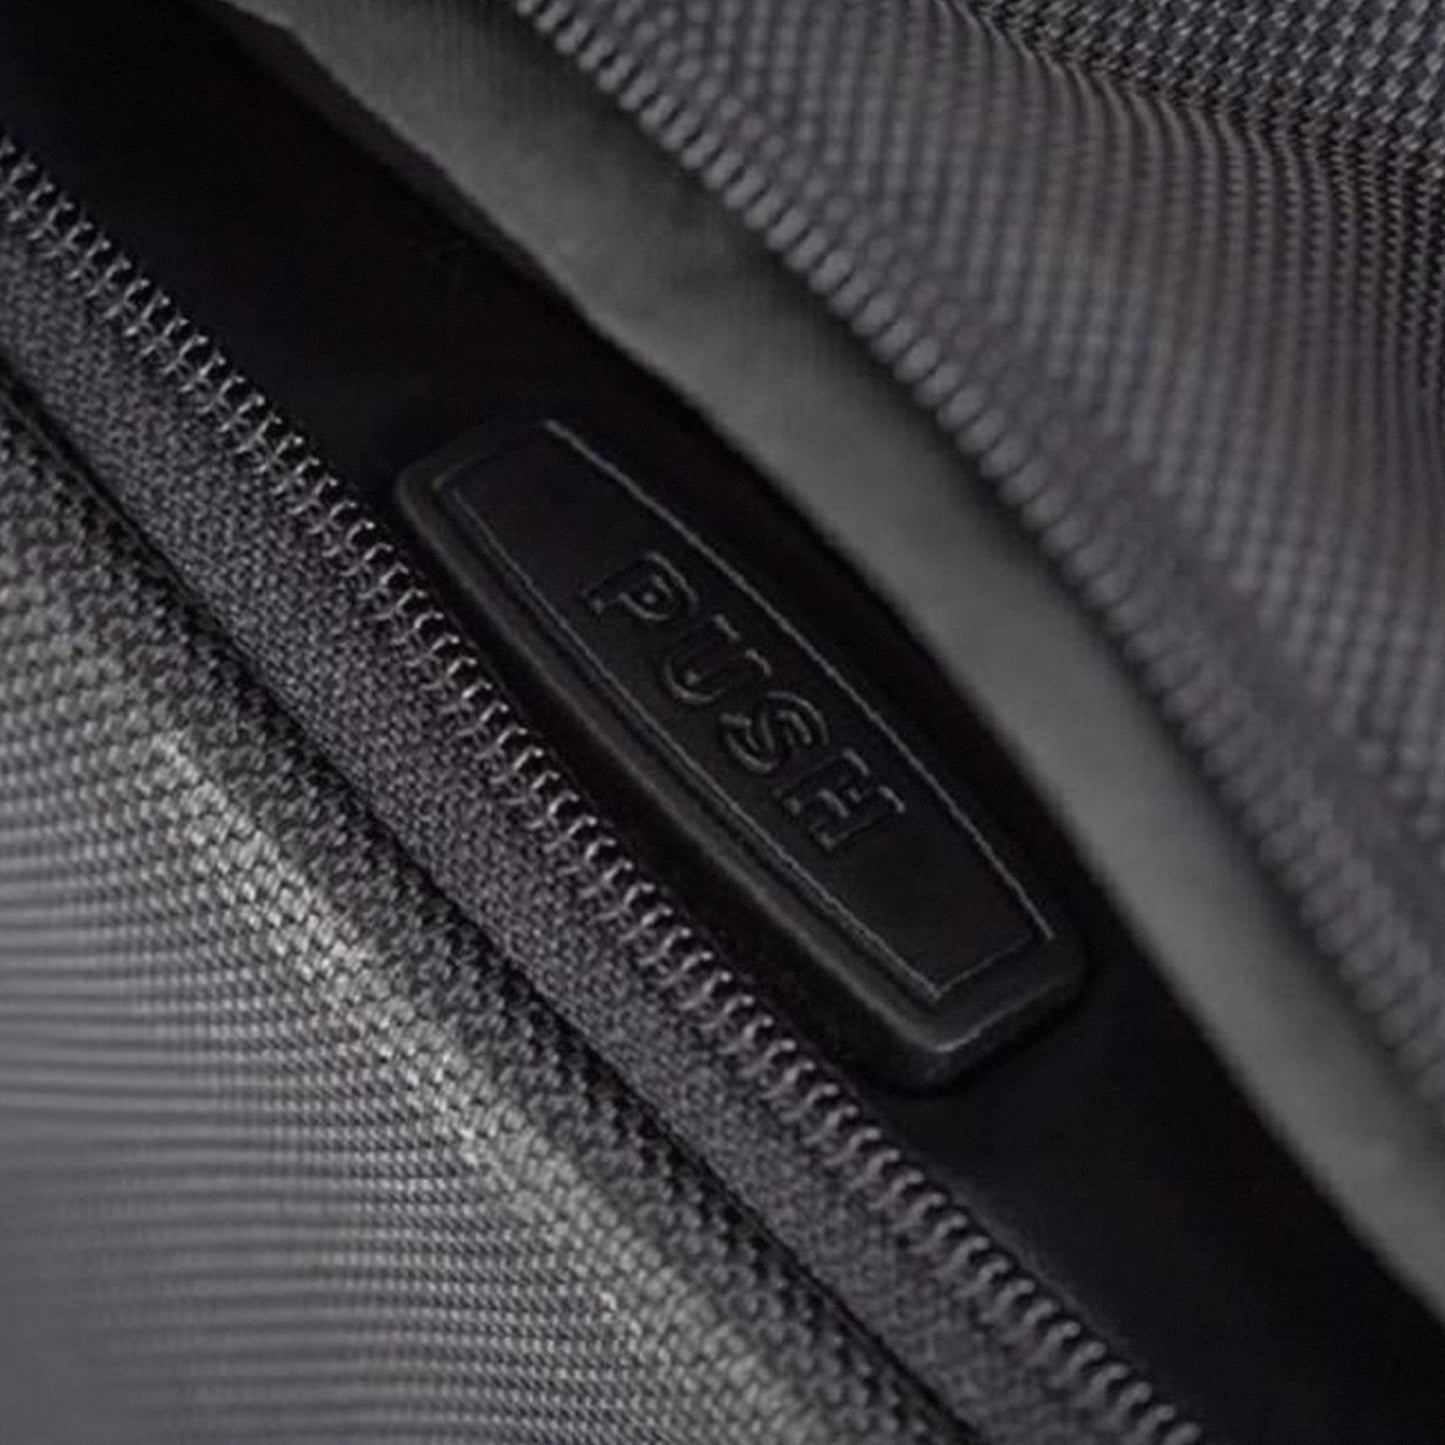 KJUST Dedicated Car Bags Set / Sport 4 pcs for Tesla Model S